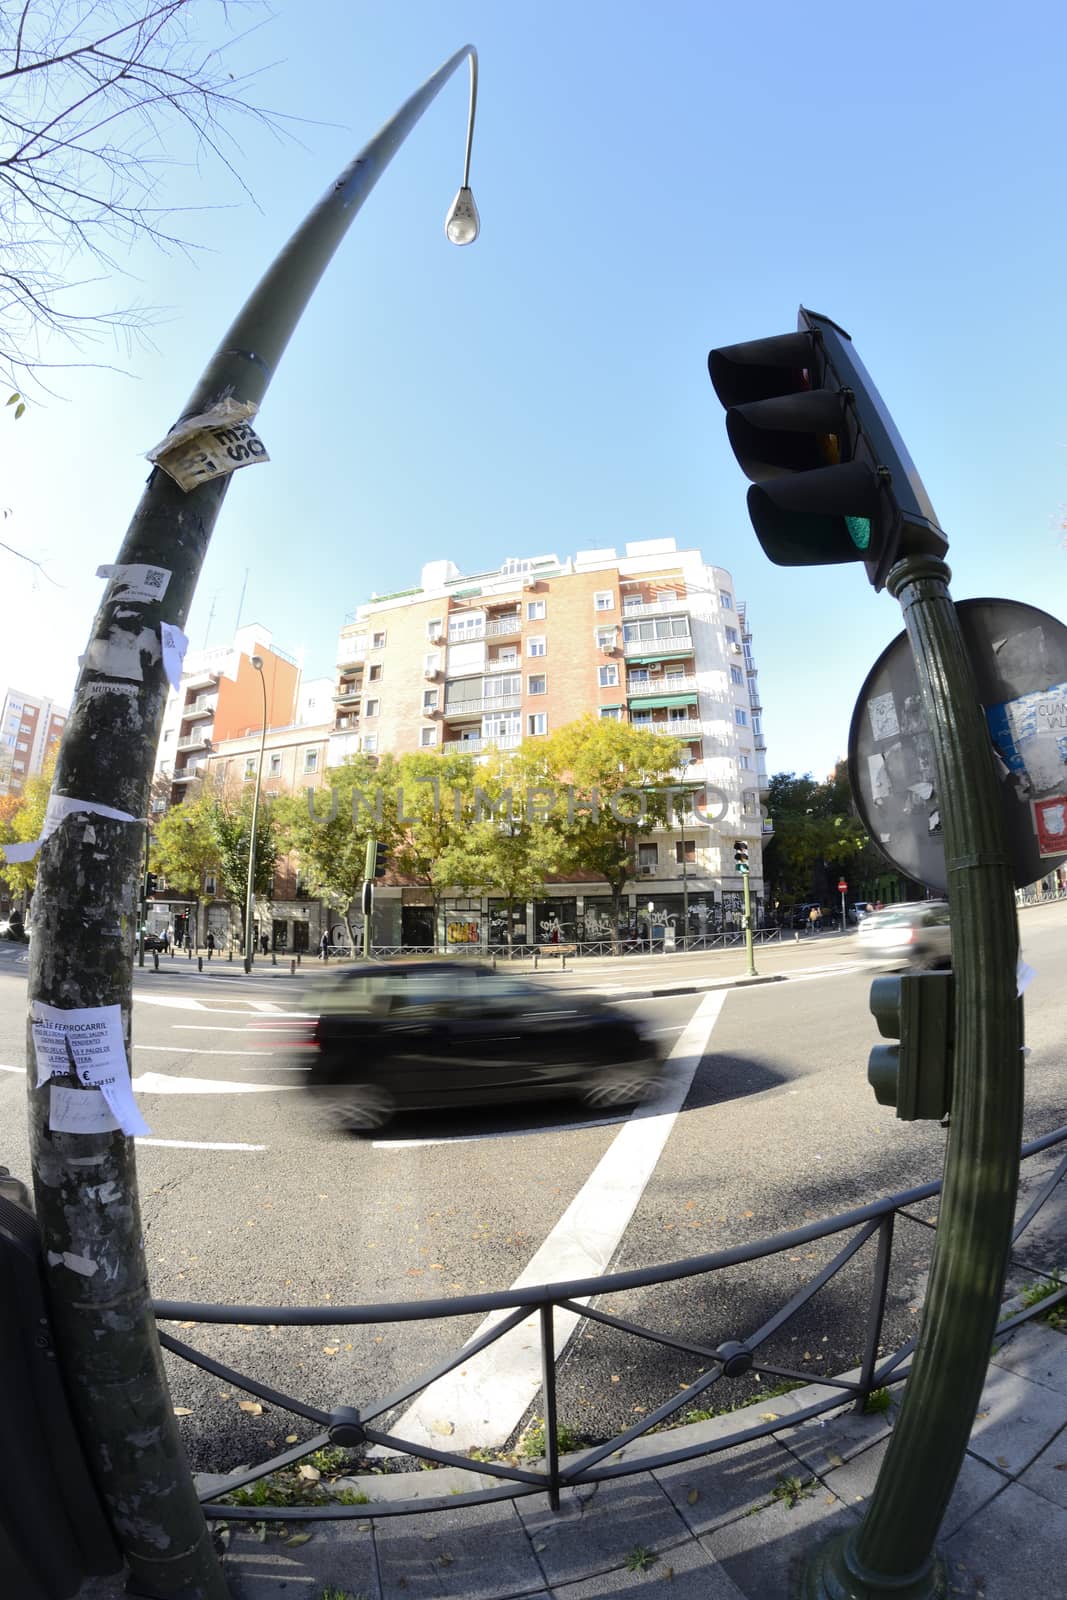 street in movement through a fisheye lens. Car and traffic light